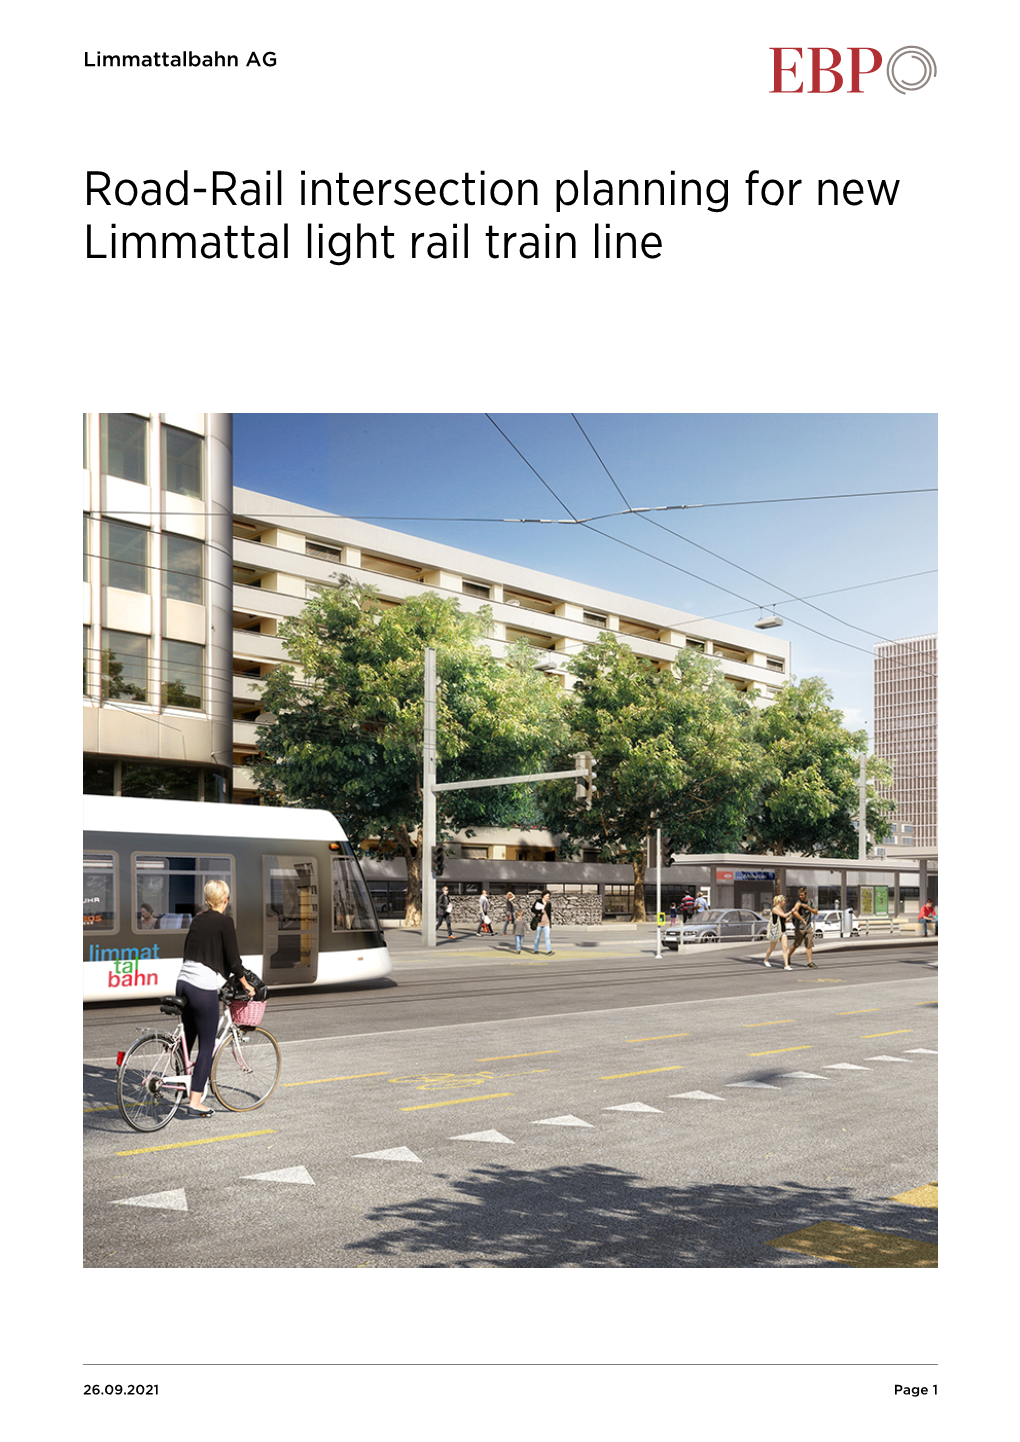 Road-Rail Intersection Planning for New Limmattal Light Rail Train Line